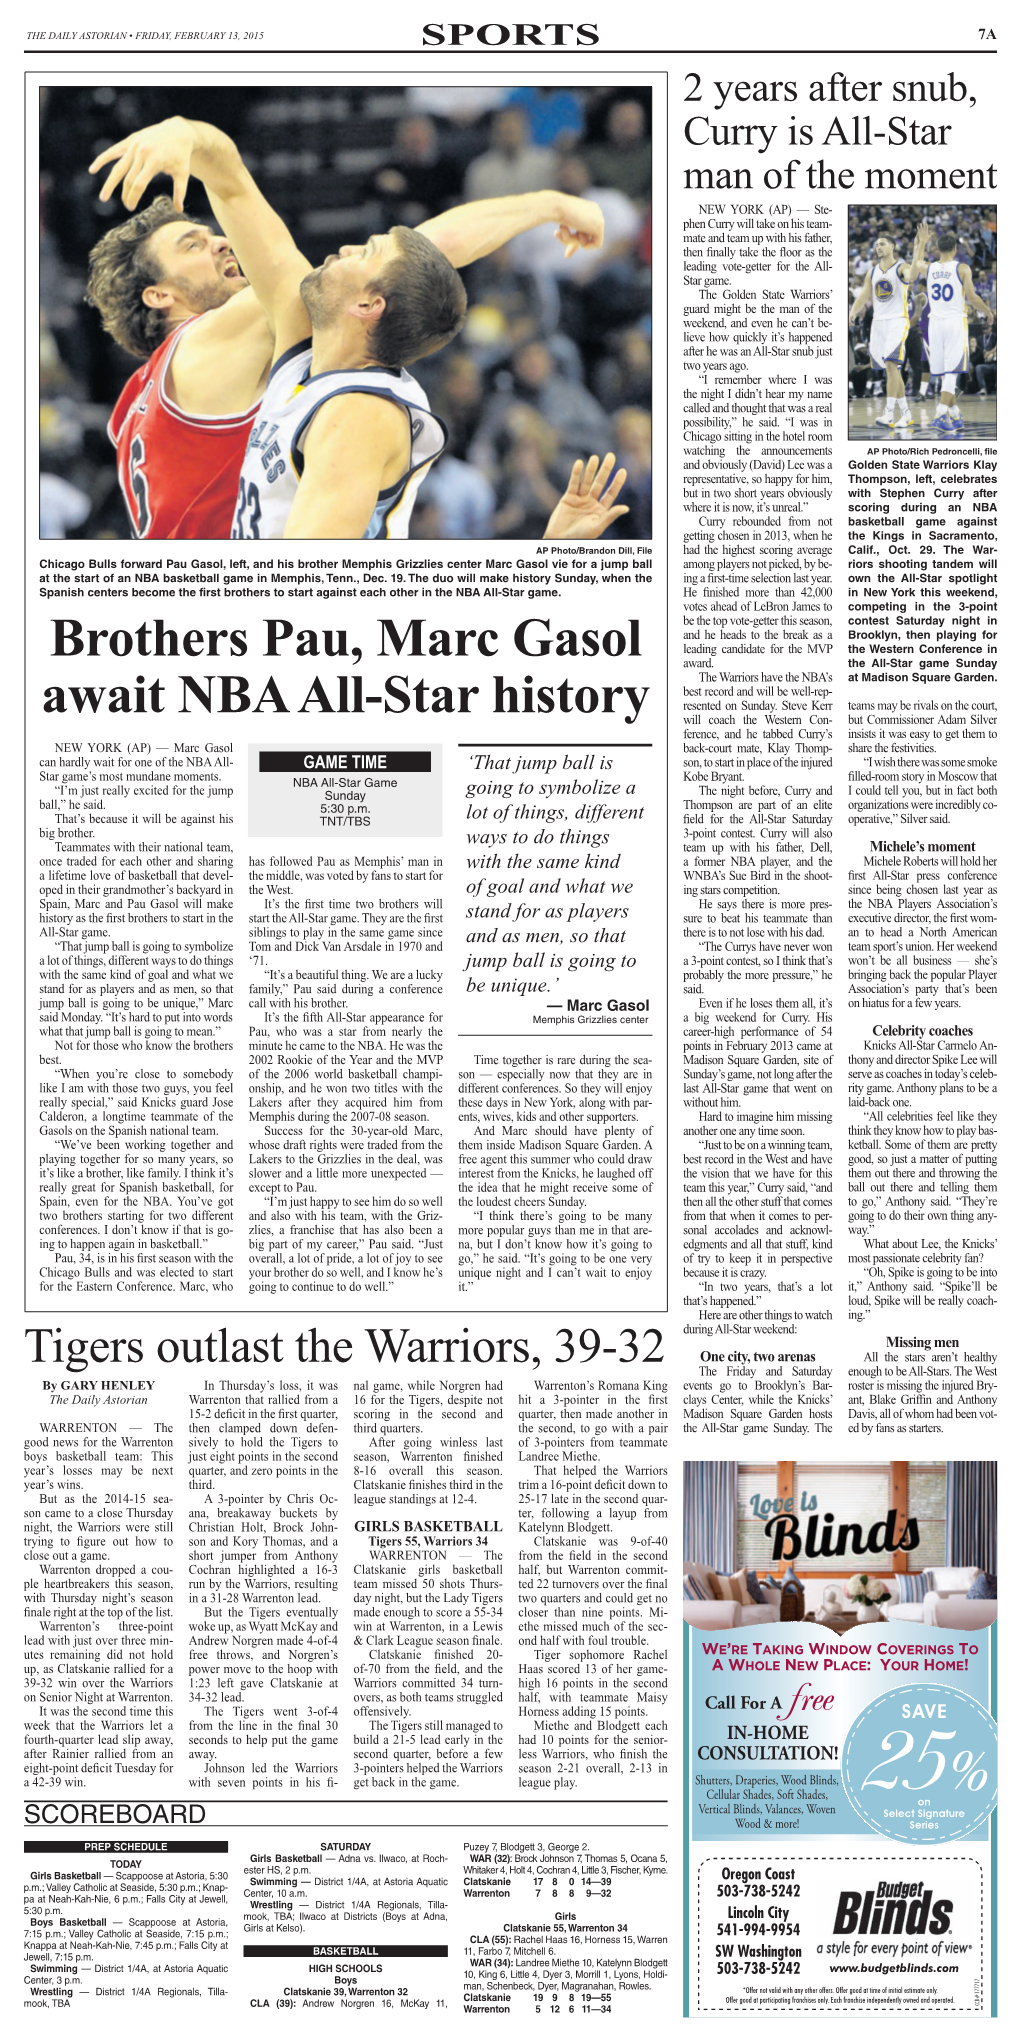 Brothers Pau, Marc Gasol Await NBA All-Star History